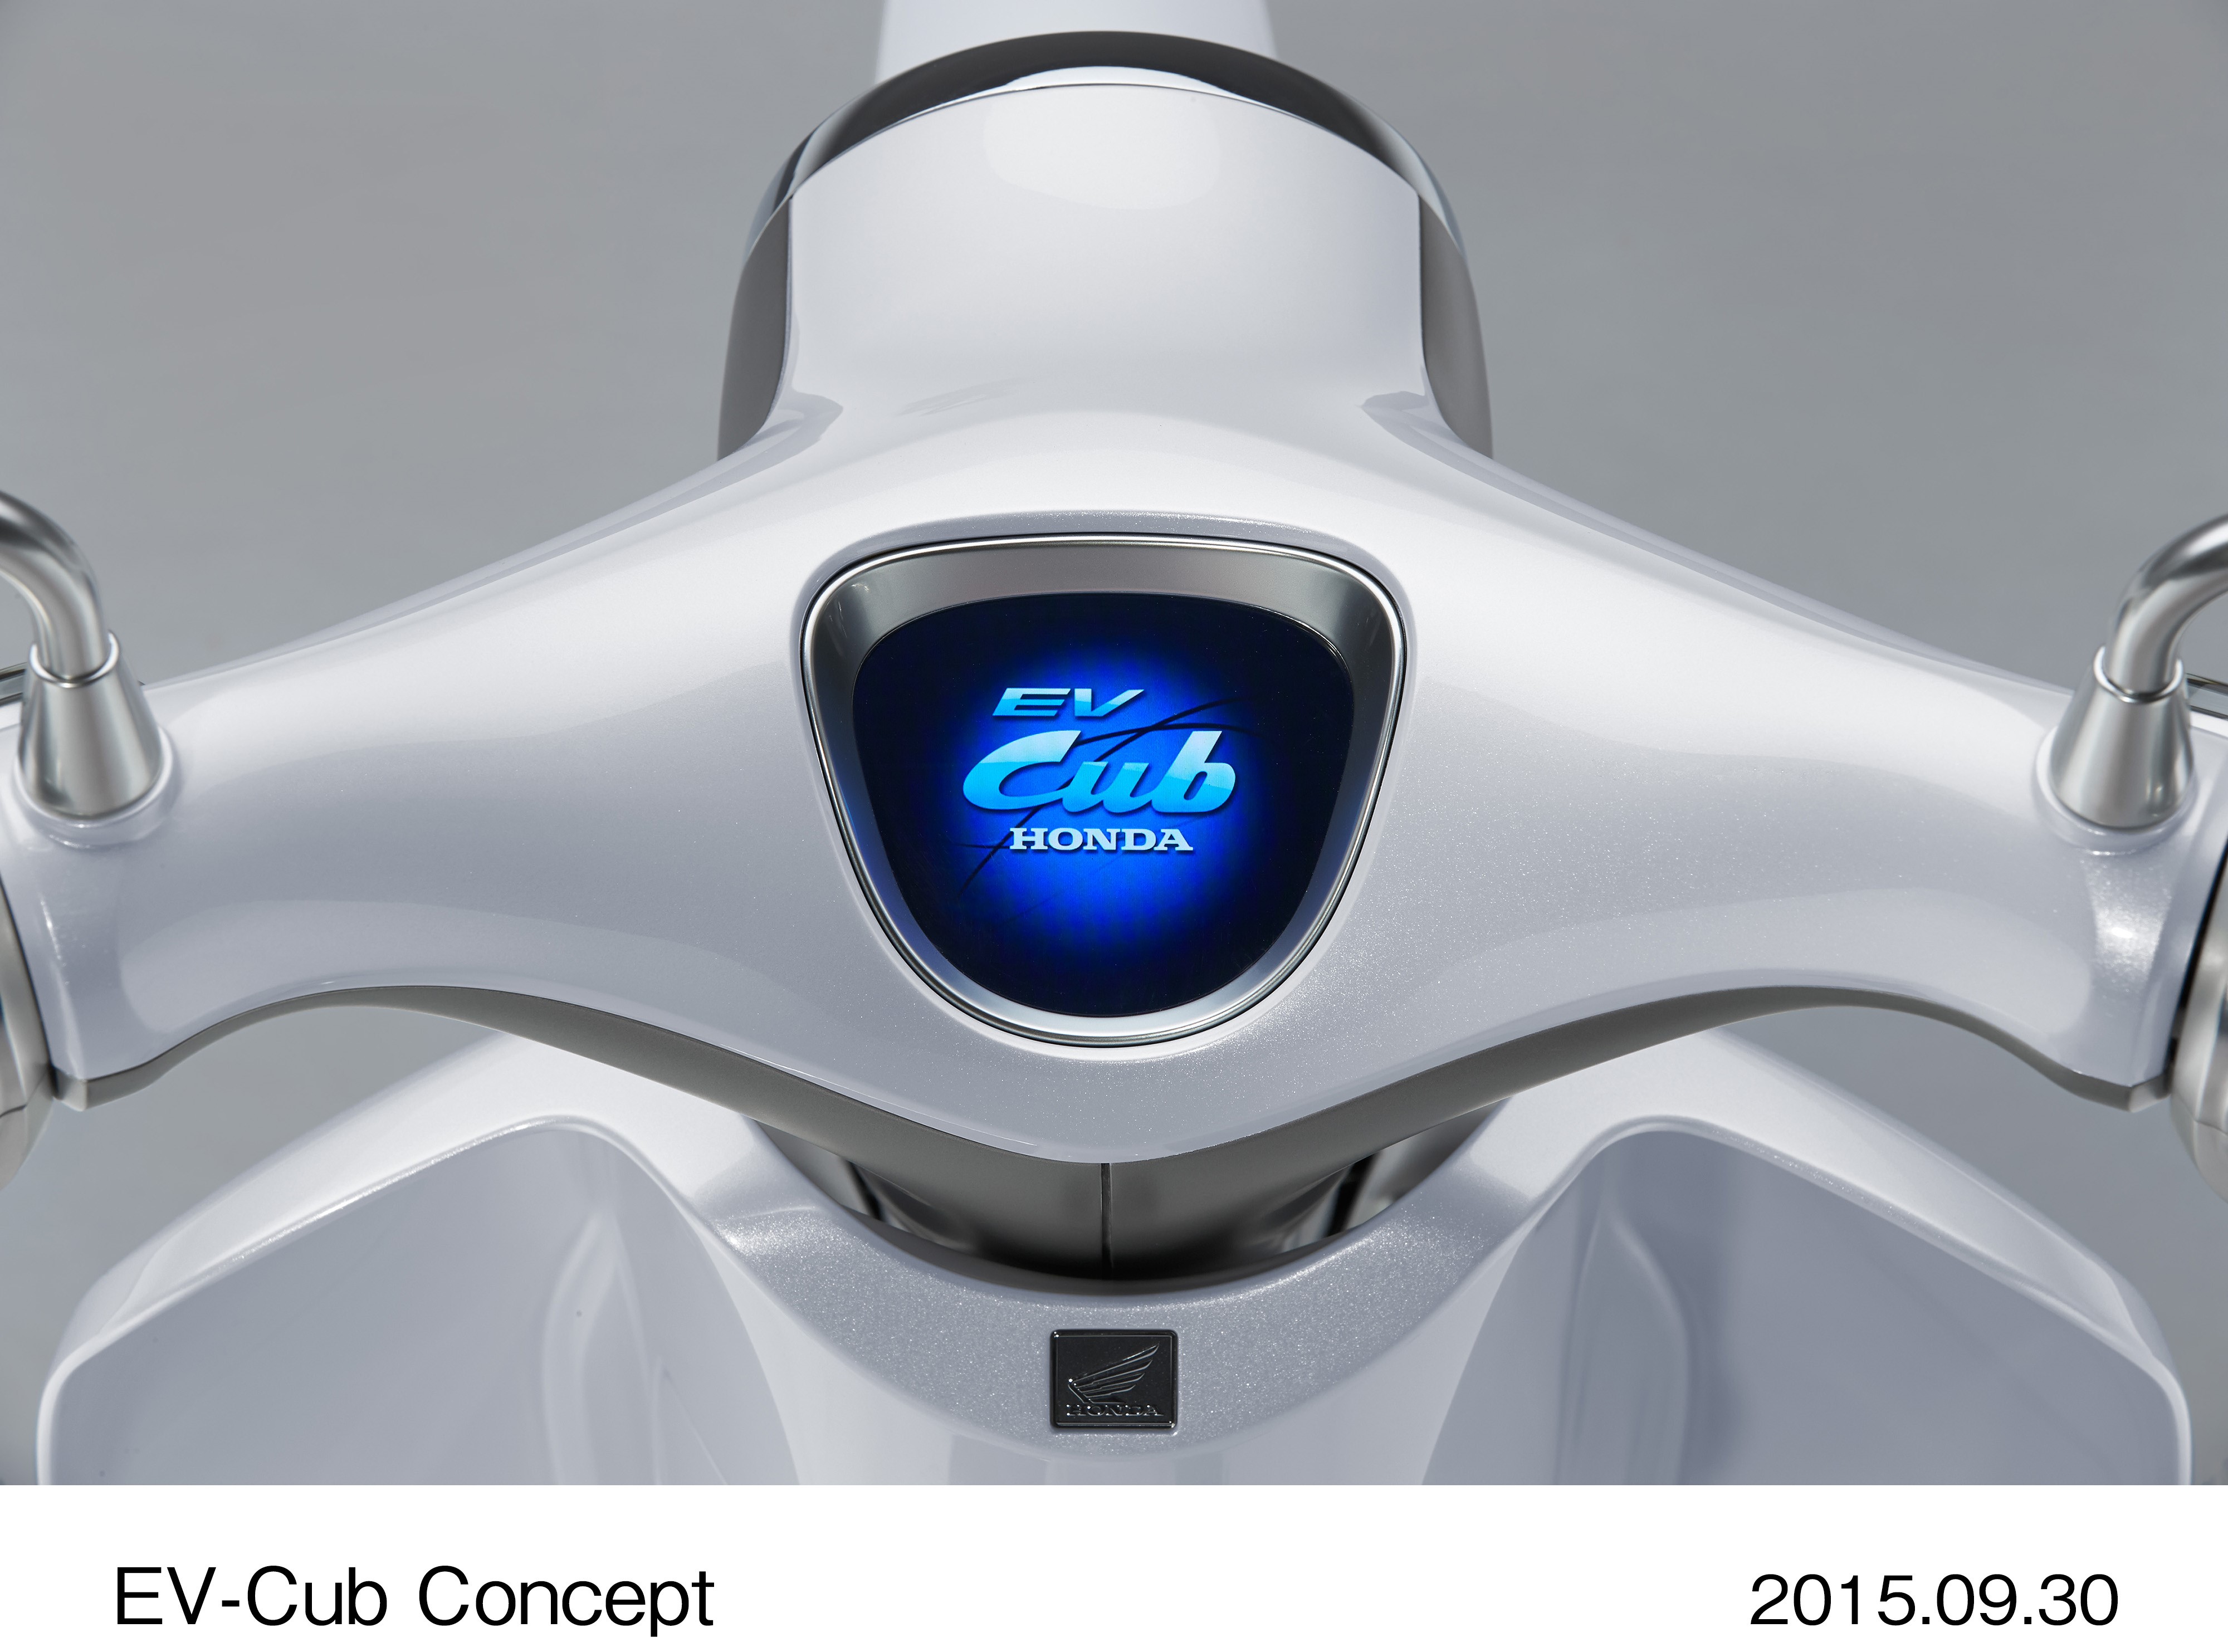 Gamma Honda - Tokyo Motor Show 2015